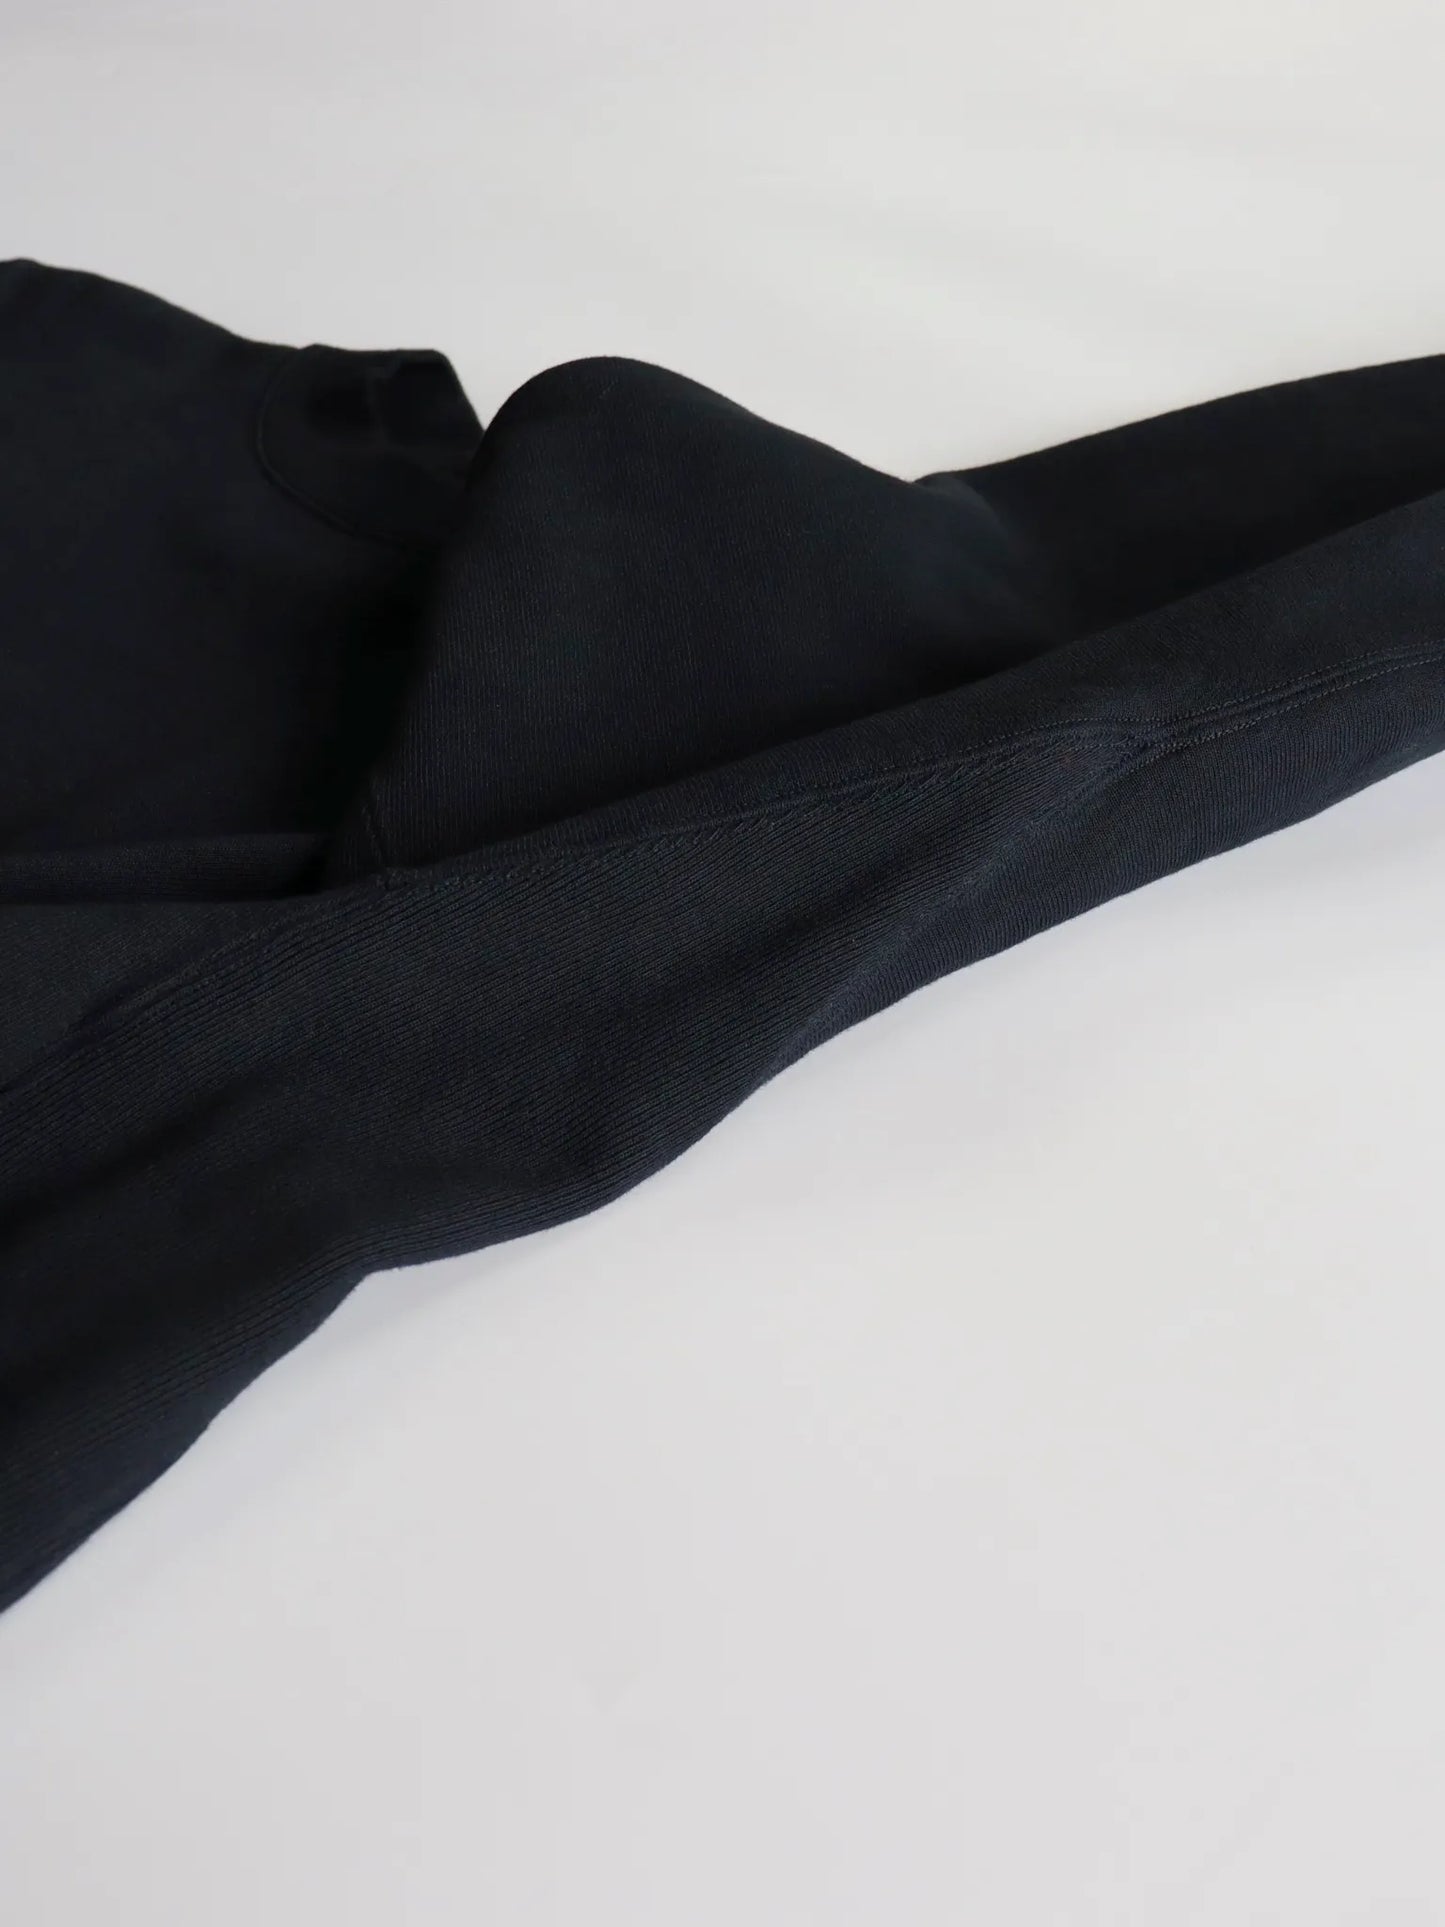 medium-sportswear-warmup-top-dusty-black-3